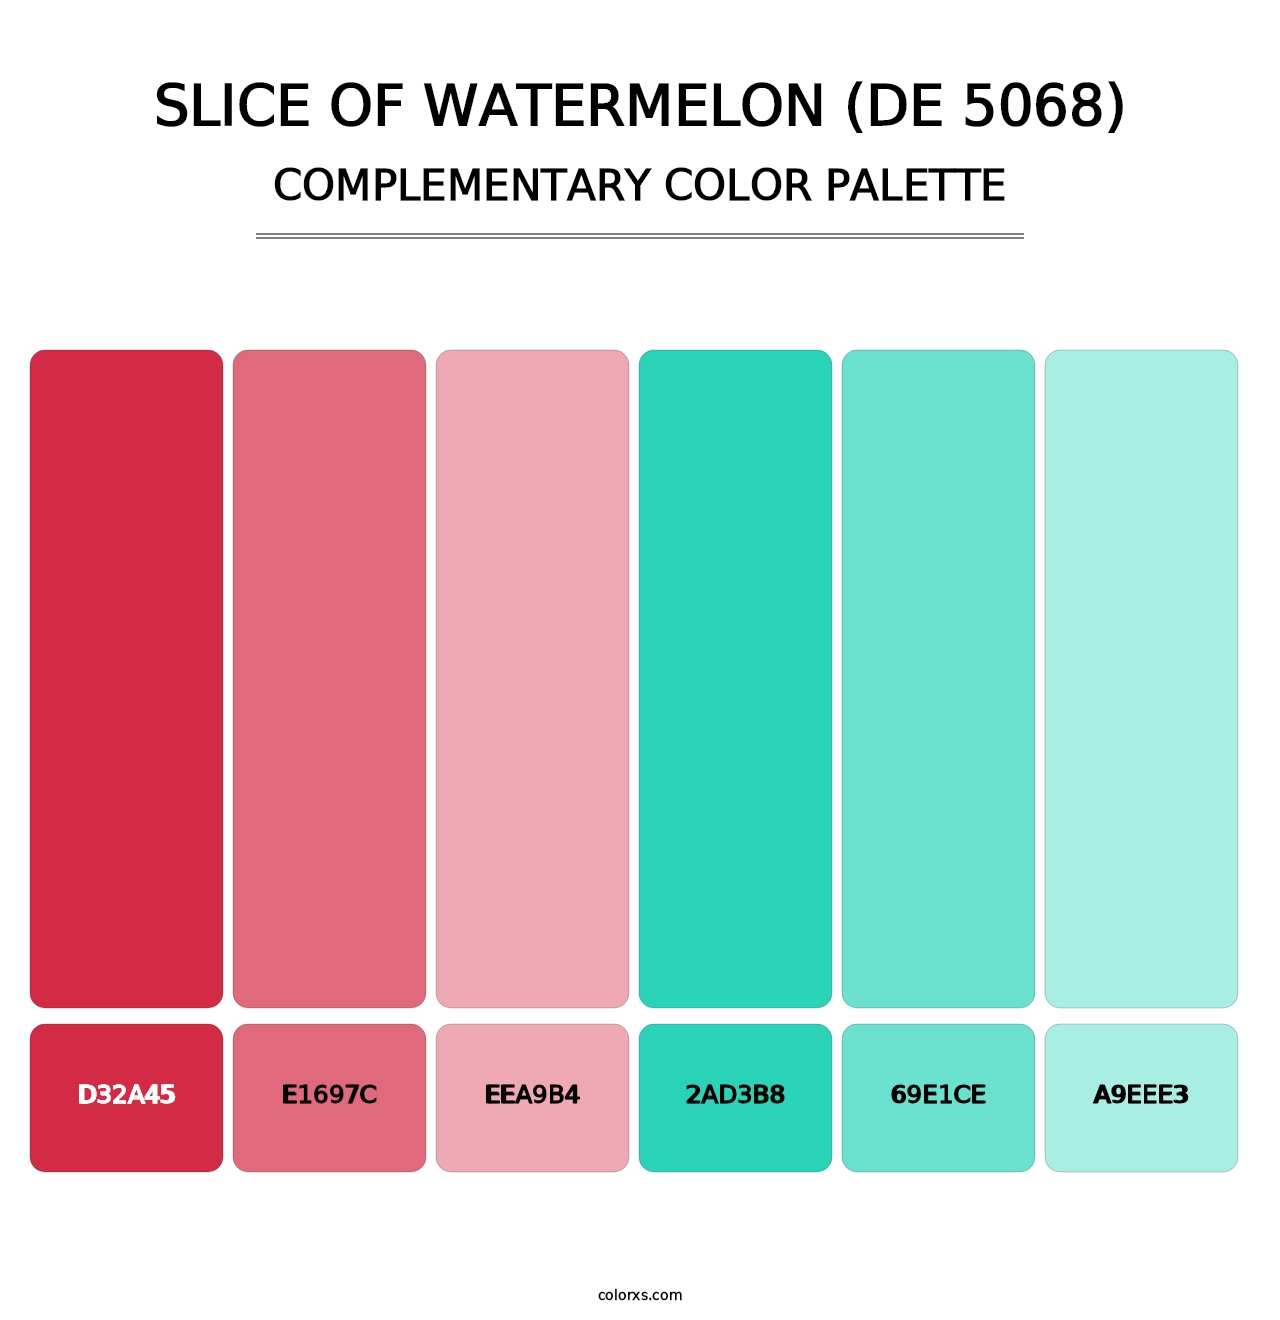 Slice of Watermelon (DE 5068) - Complementary Color Palette